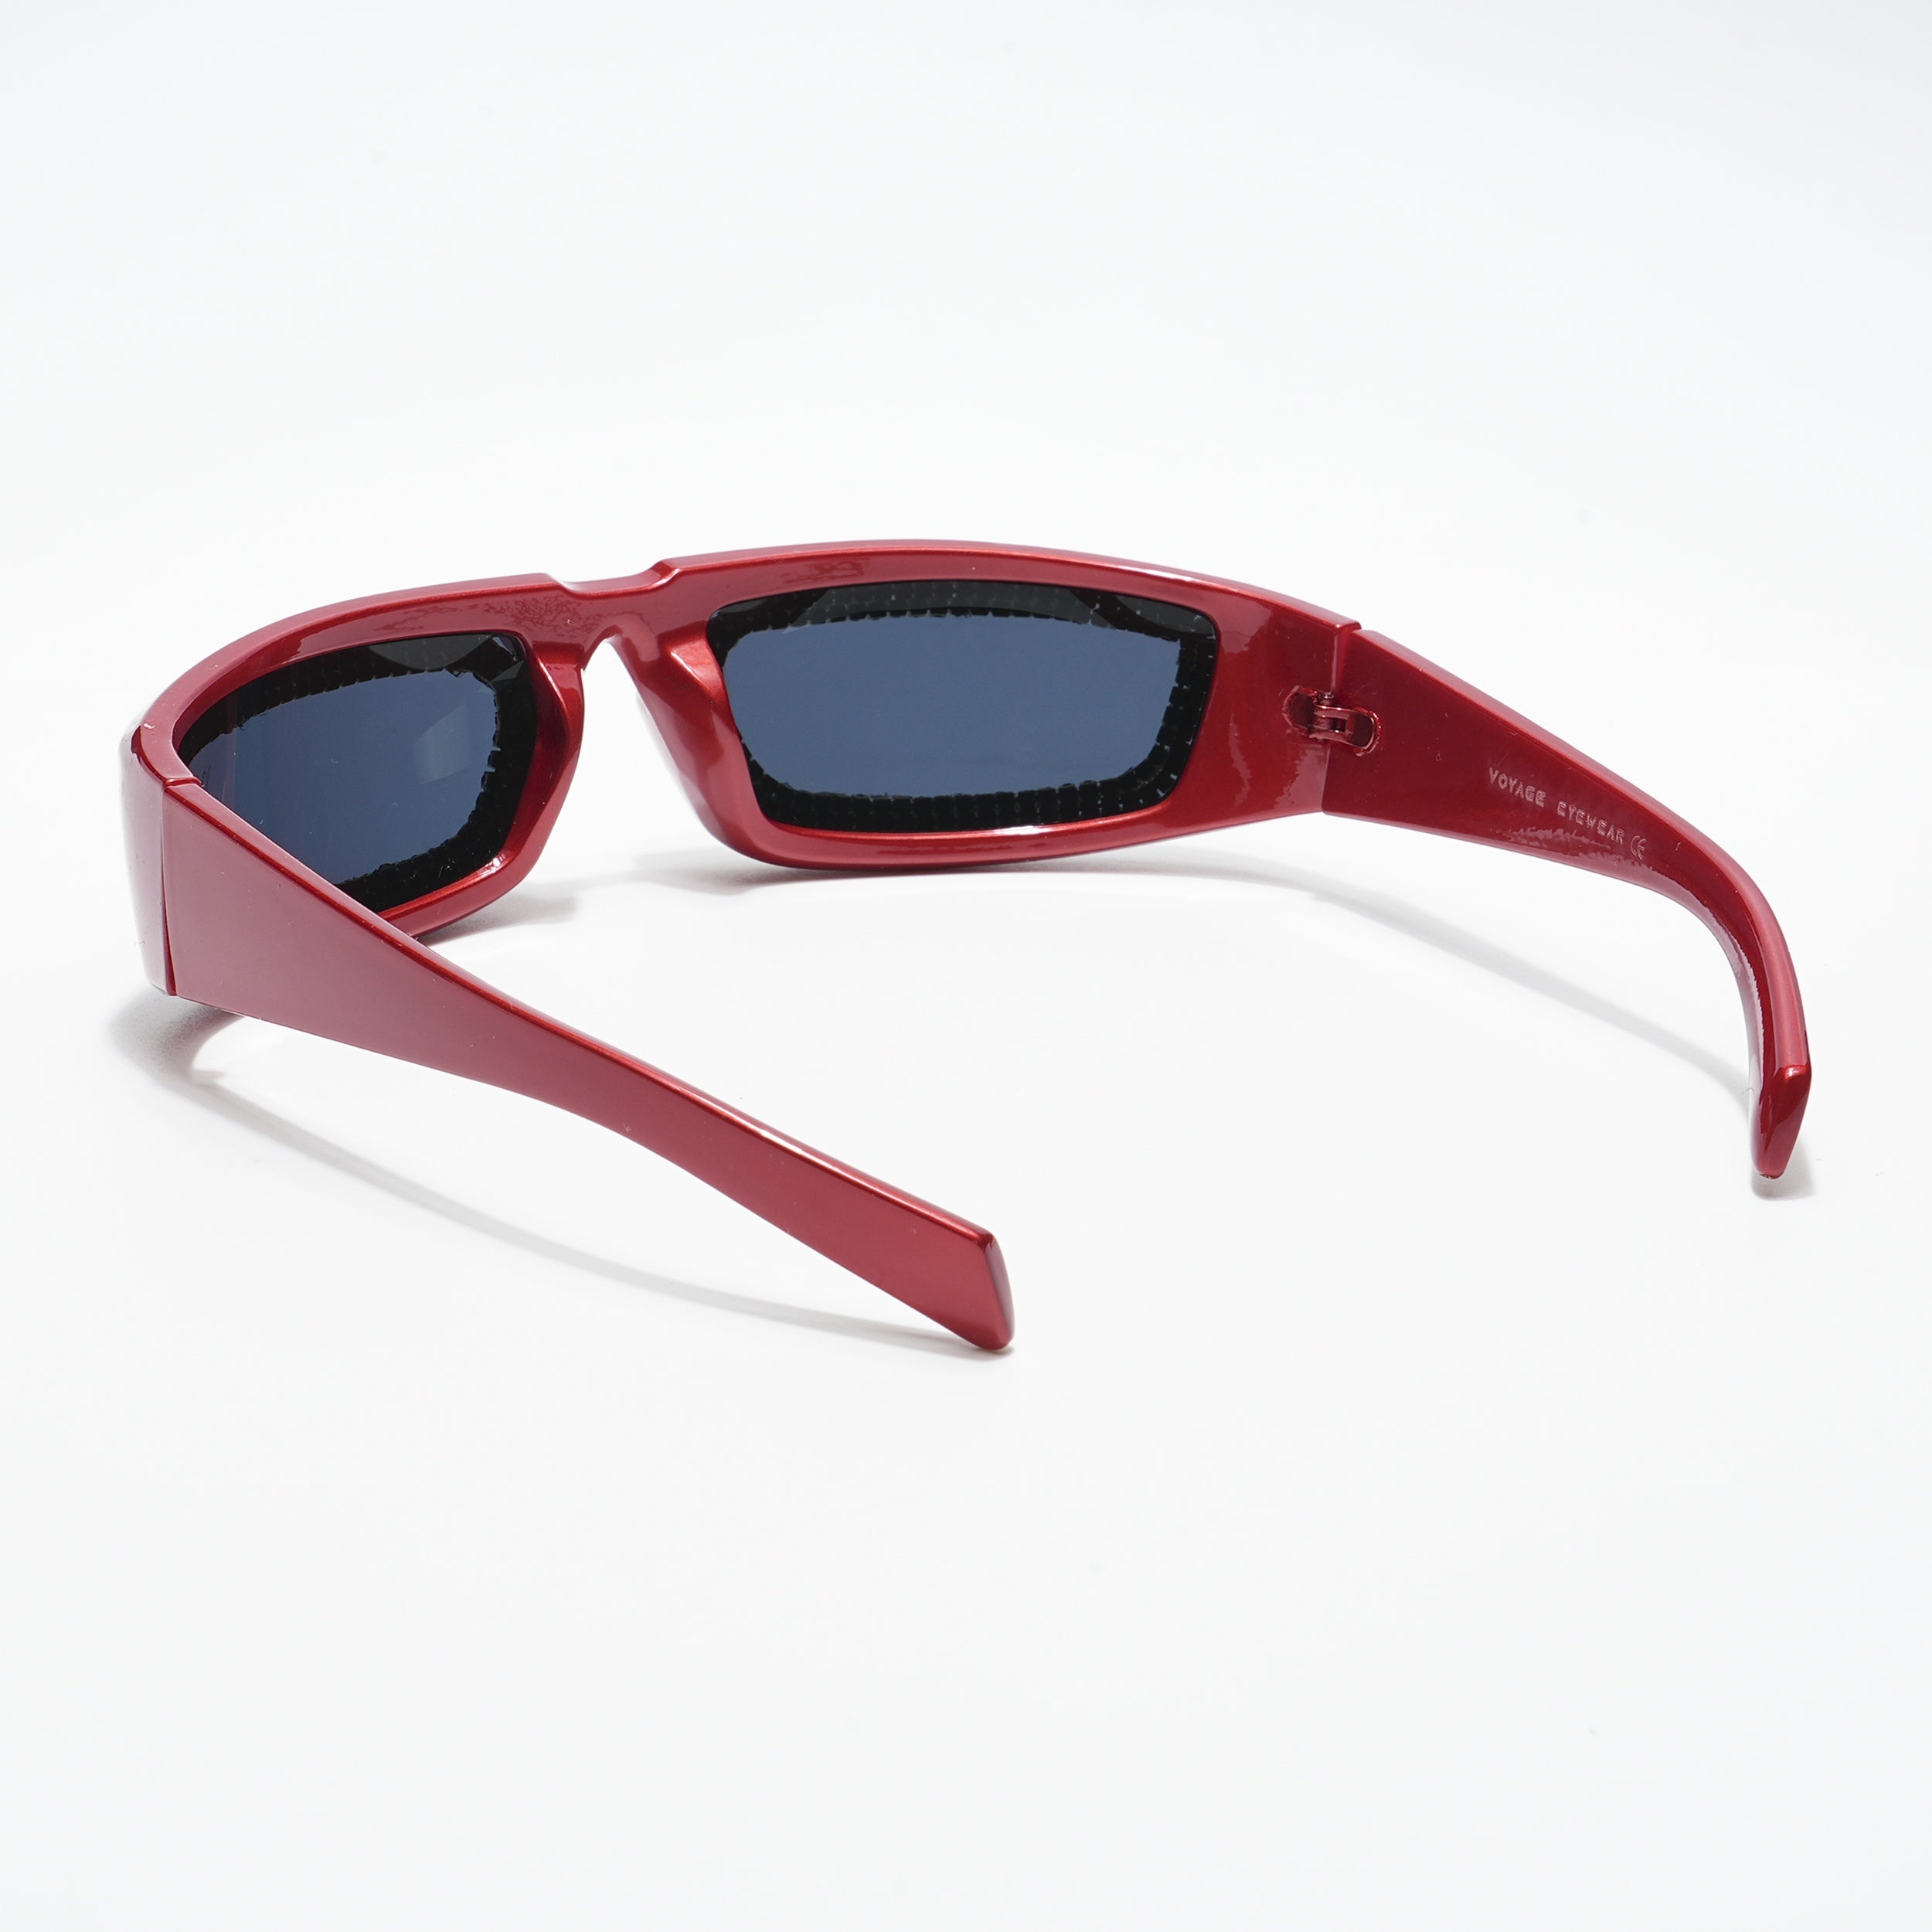 Voyage Black Wrap-Around Sunglasses for Men & Women - MG4355